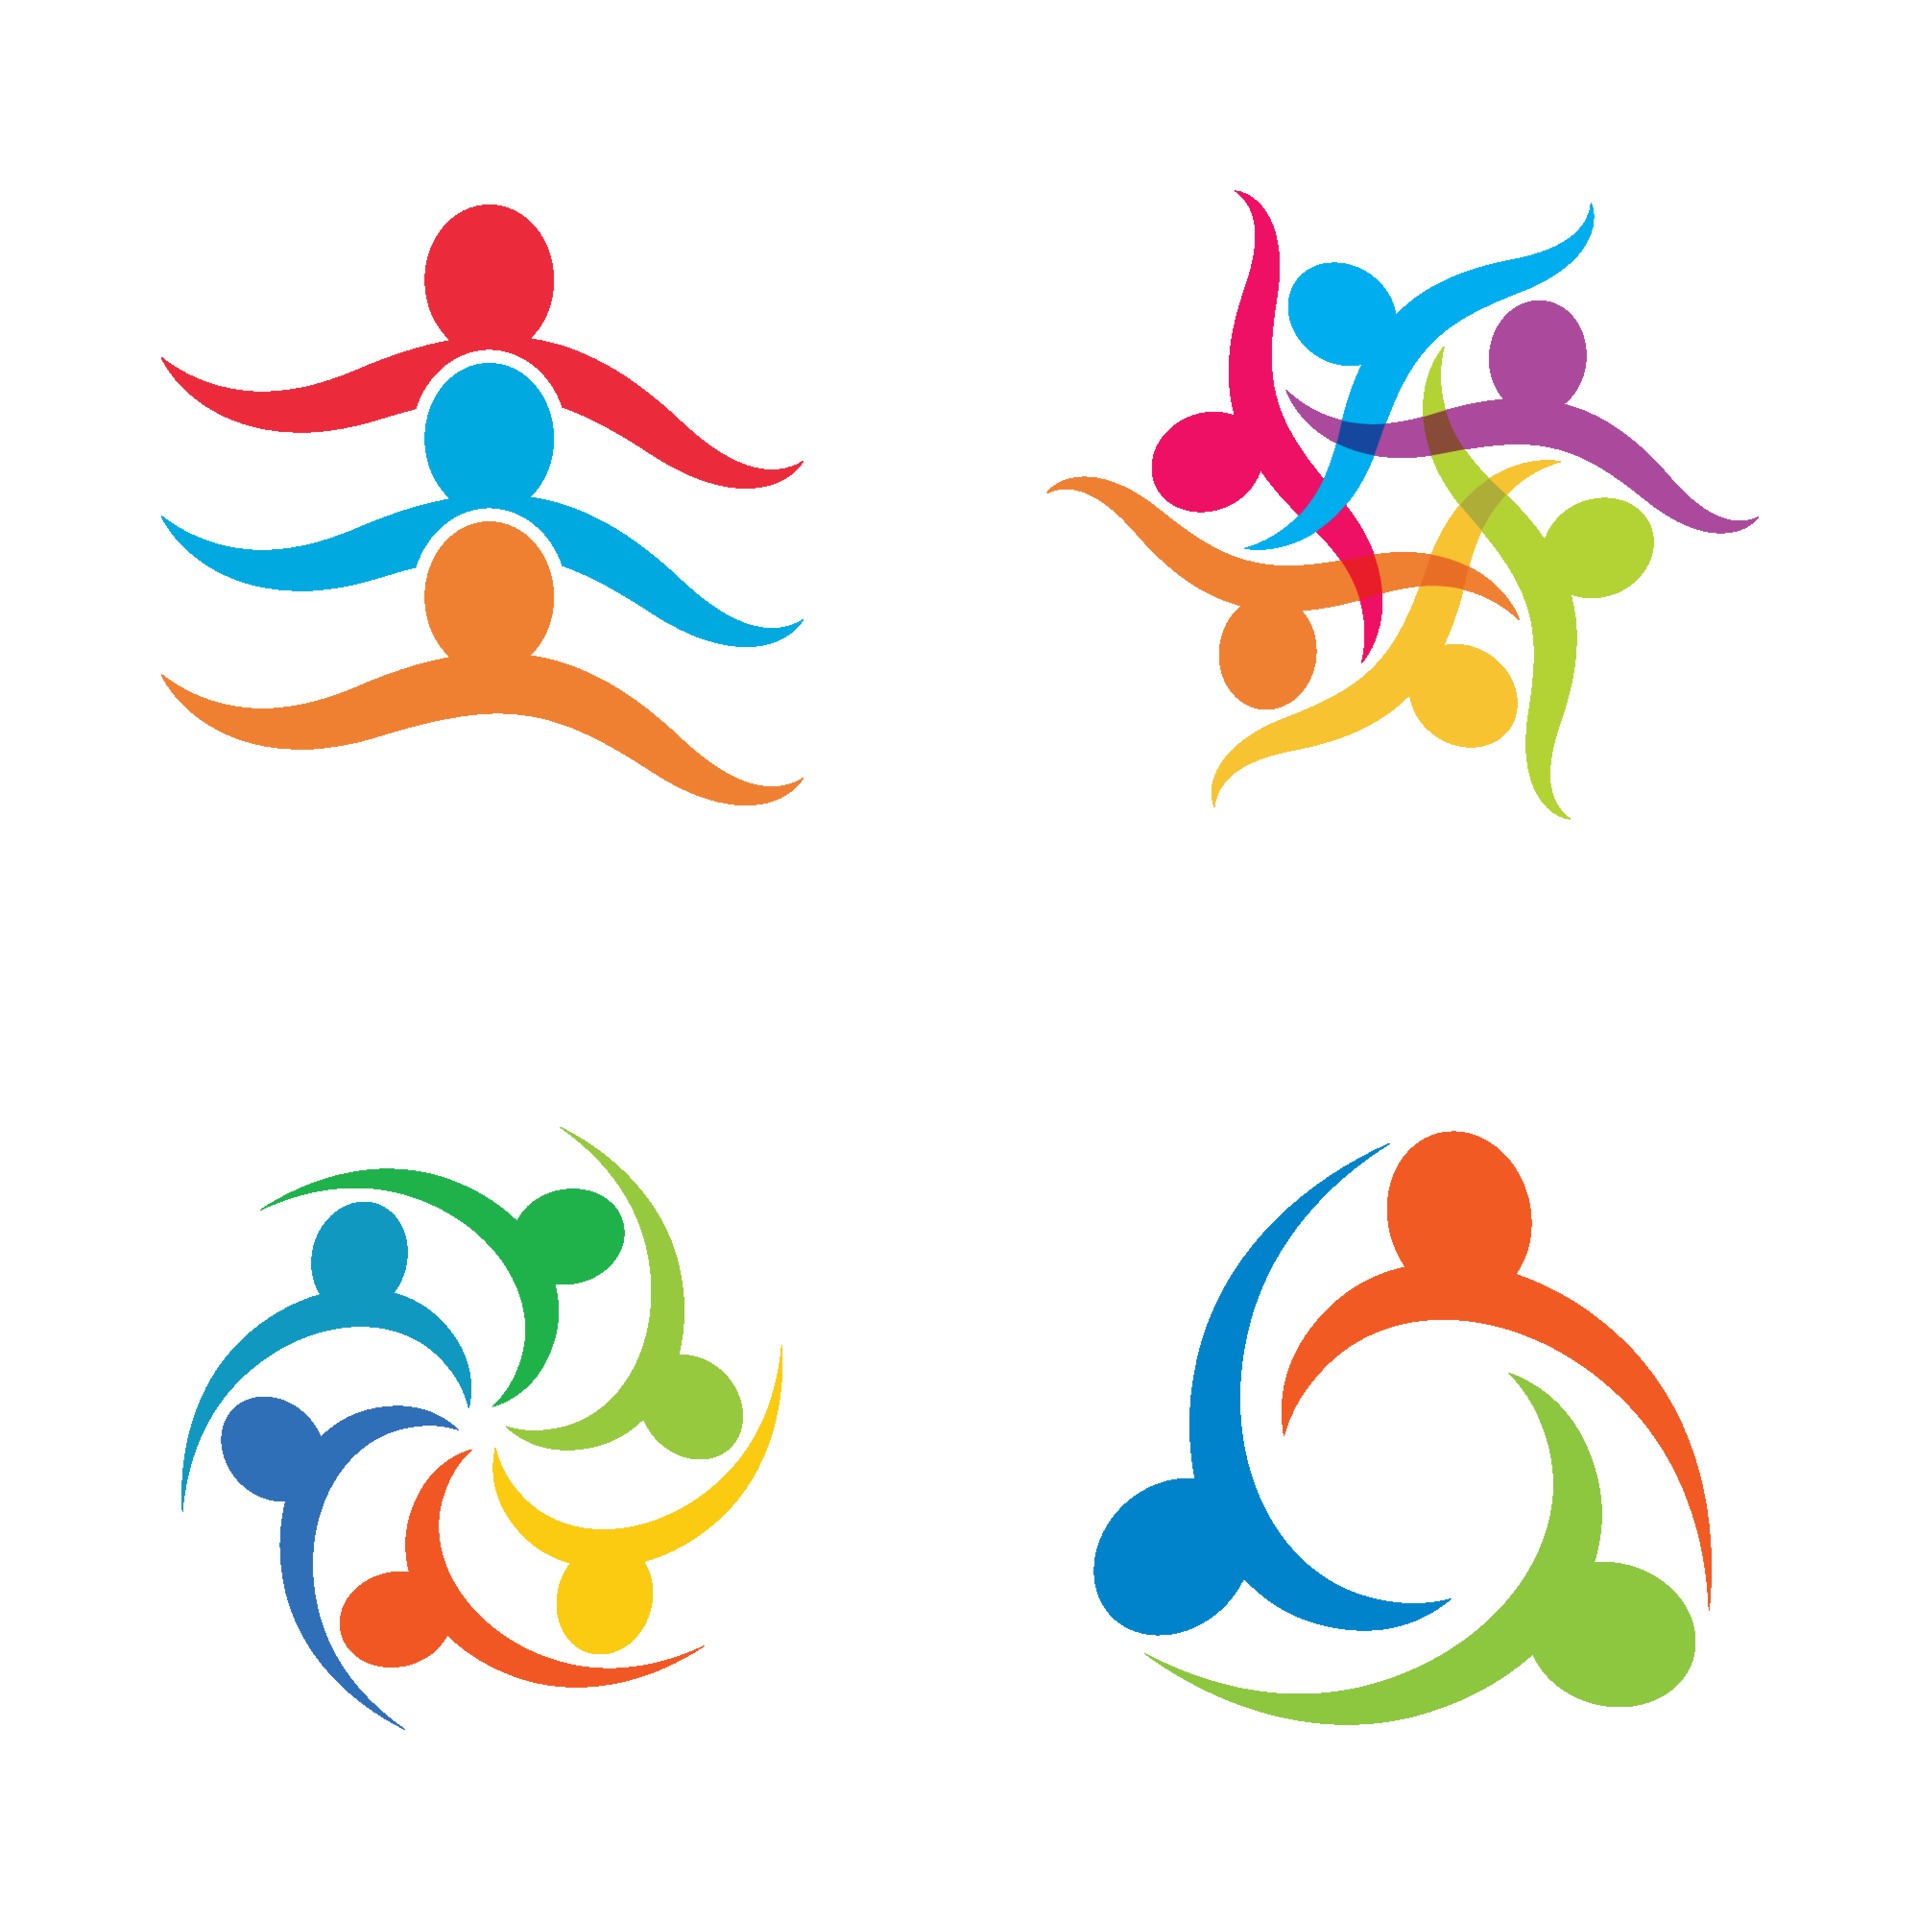 Community care logo images design 2035958 Vector Art at Vecteezy